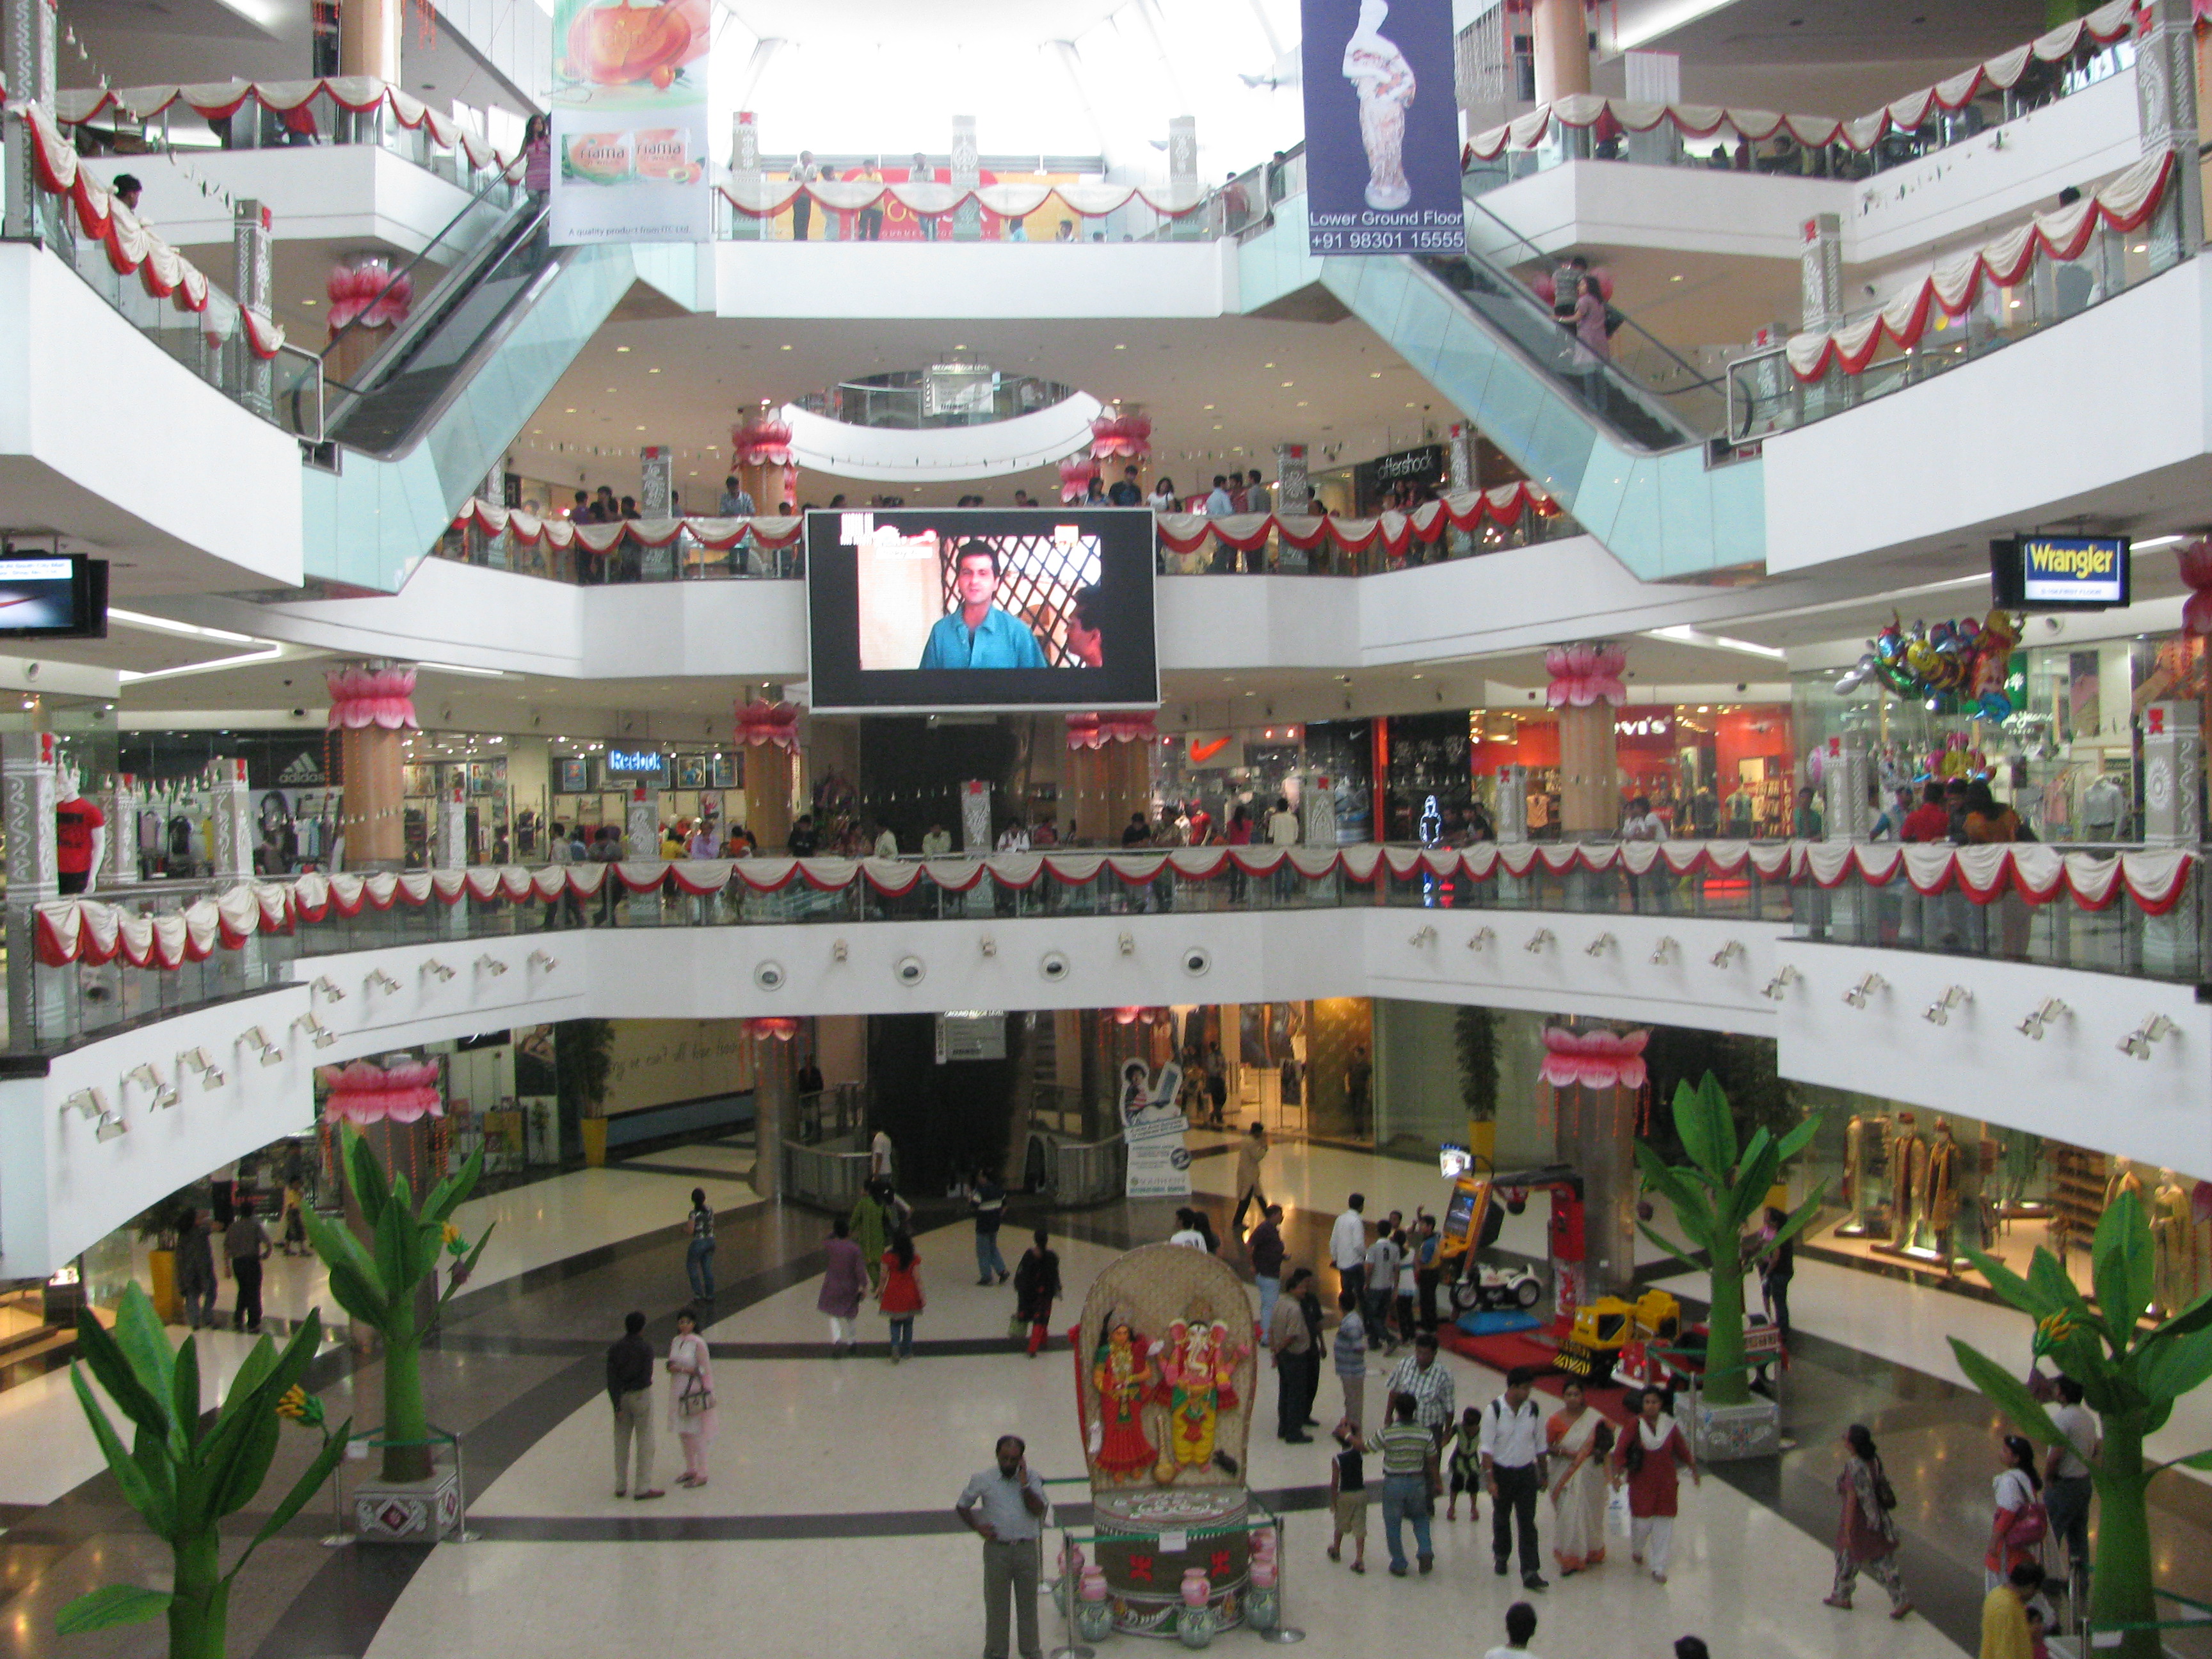 Forum Mall Kolkata Map